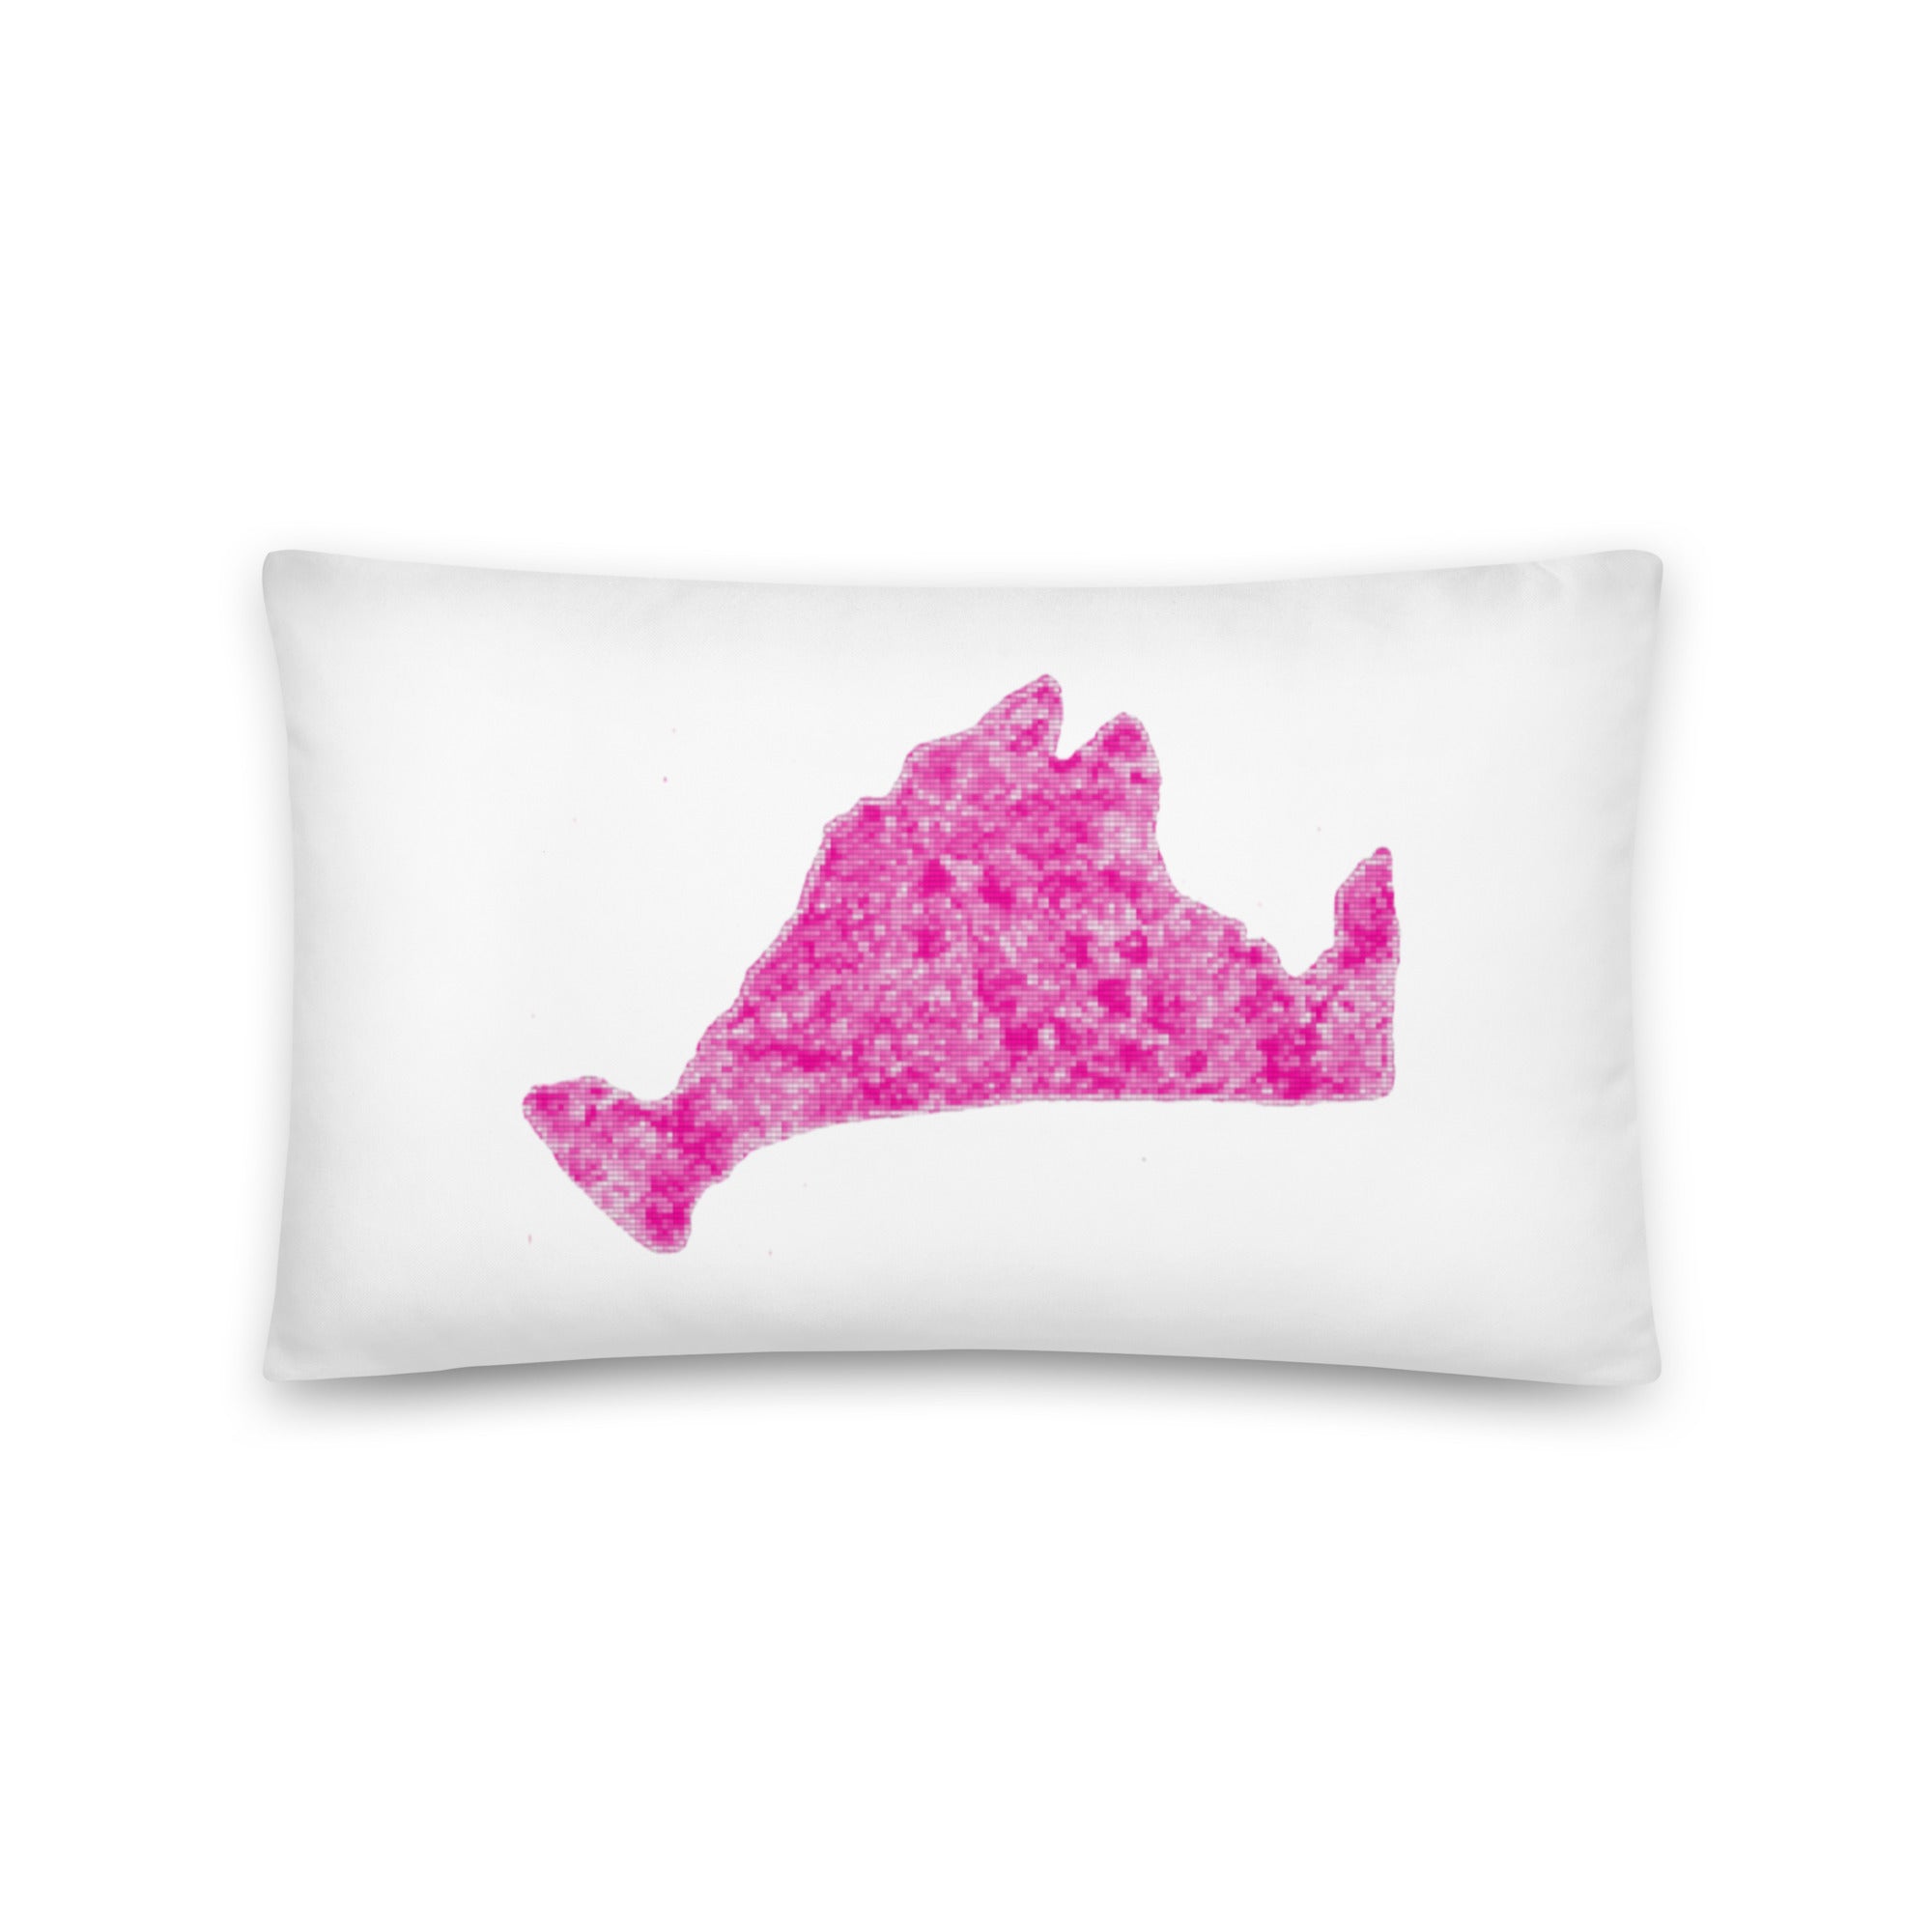 Pink Pixels Pillow